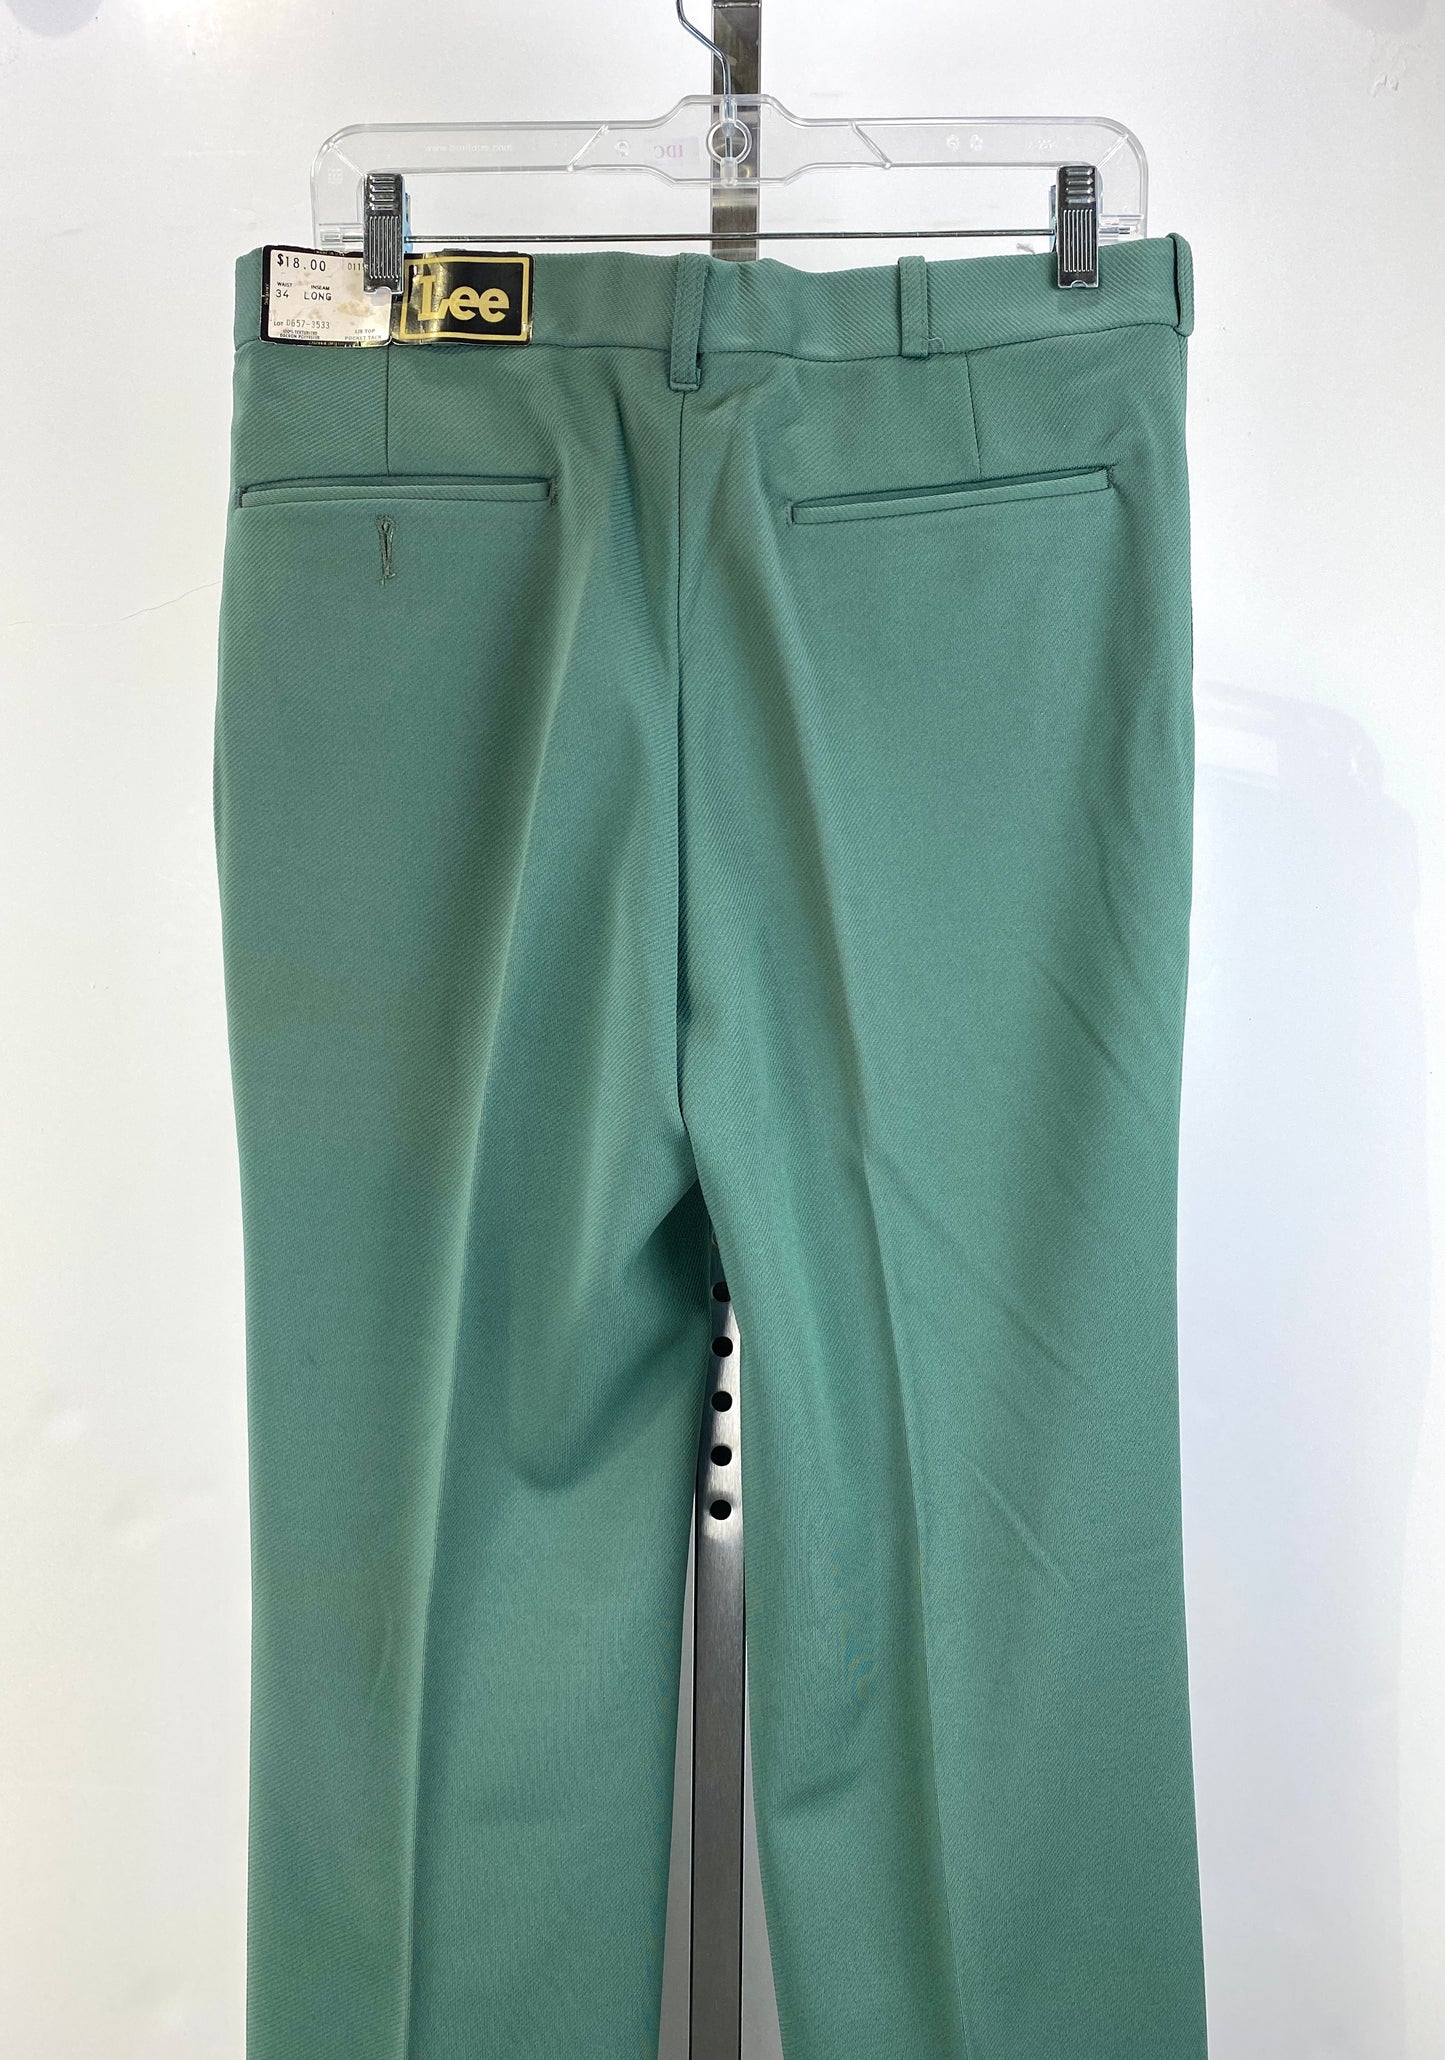 Vintage 1970s Deadstock Lee Polyester Flared Trousers, Men's Green Slacks, NOS